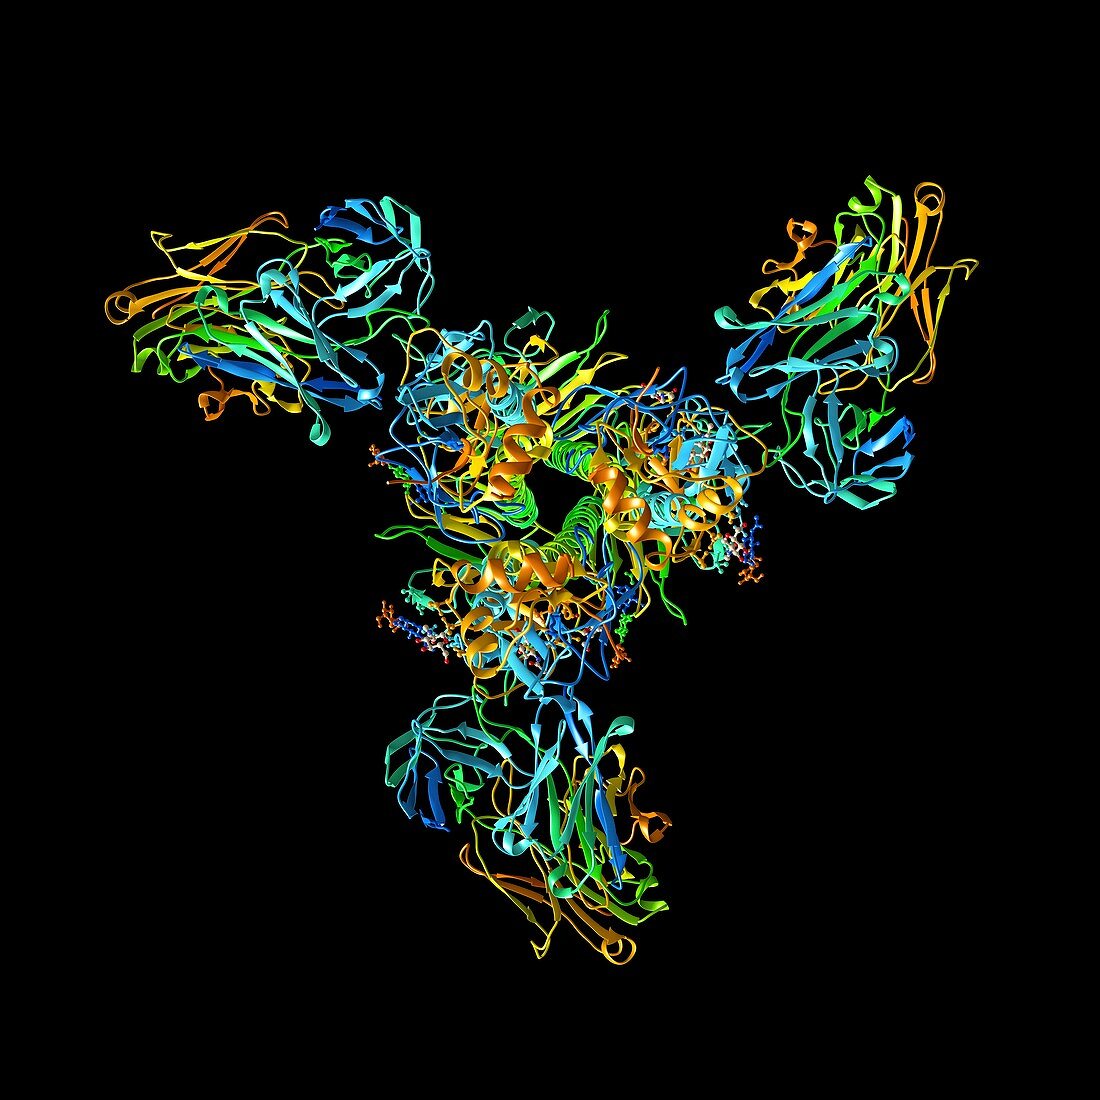 Haemagglutinin viral surface protein